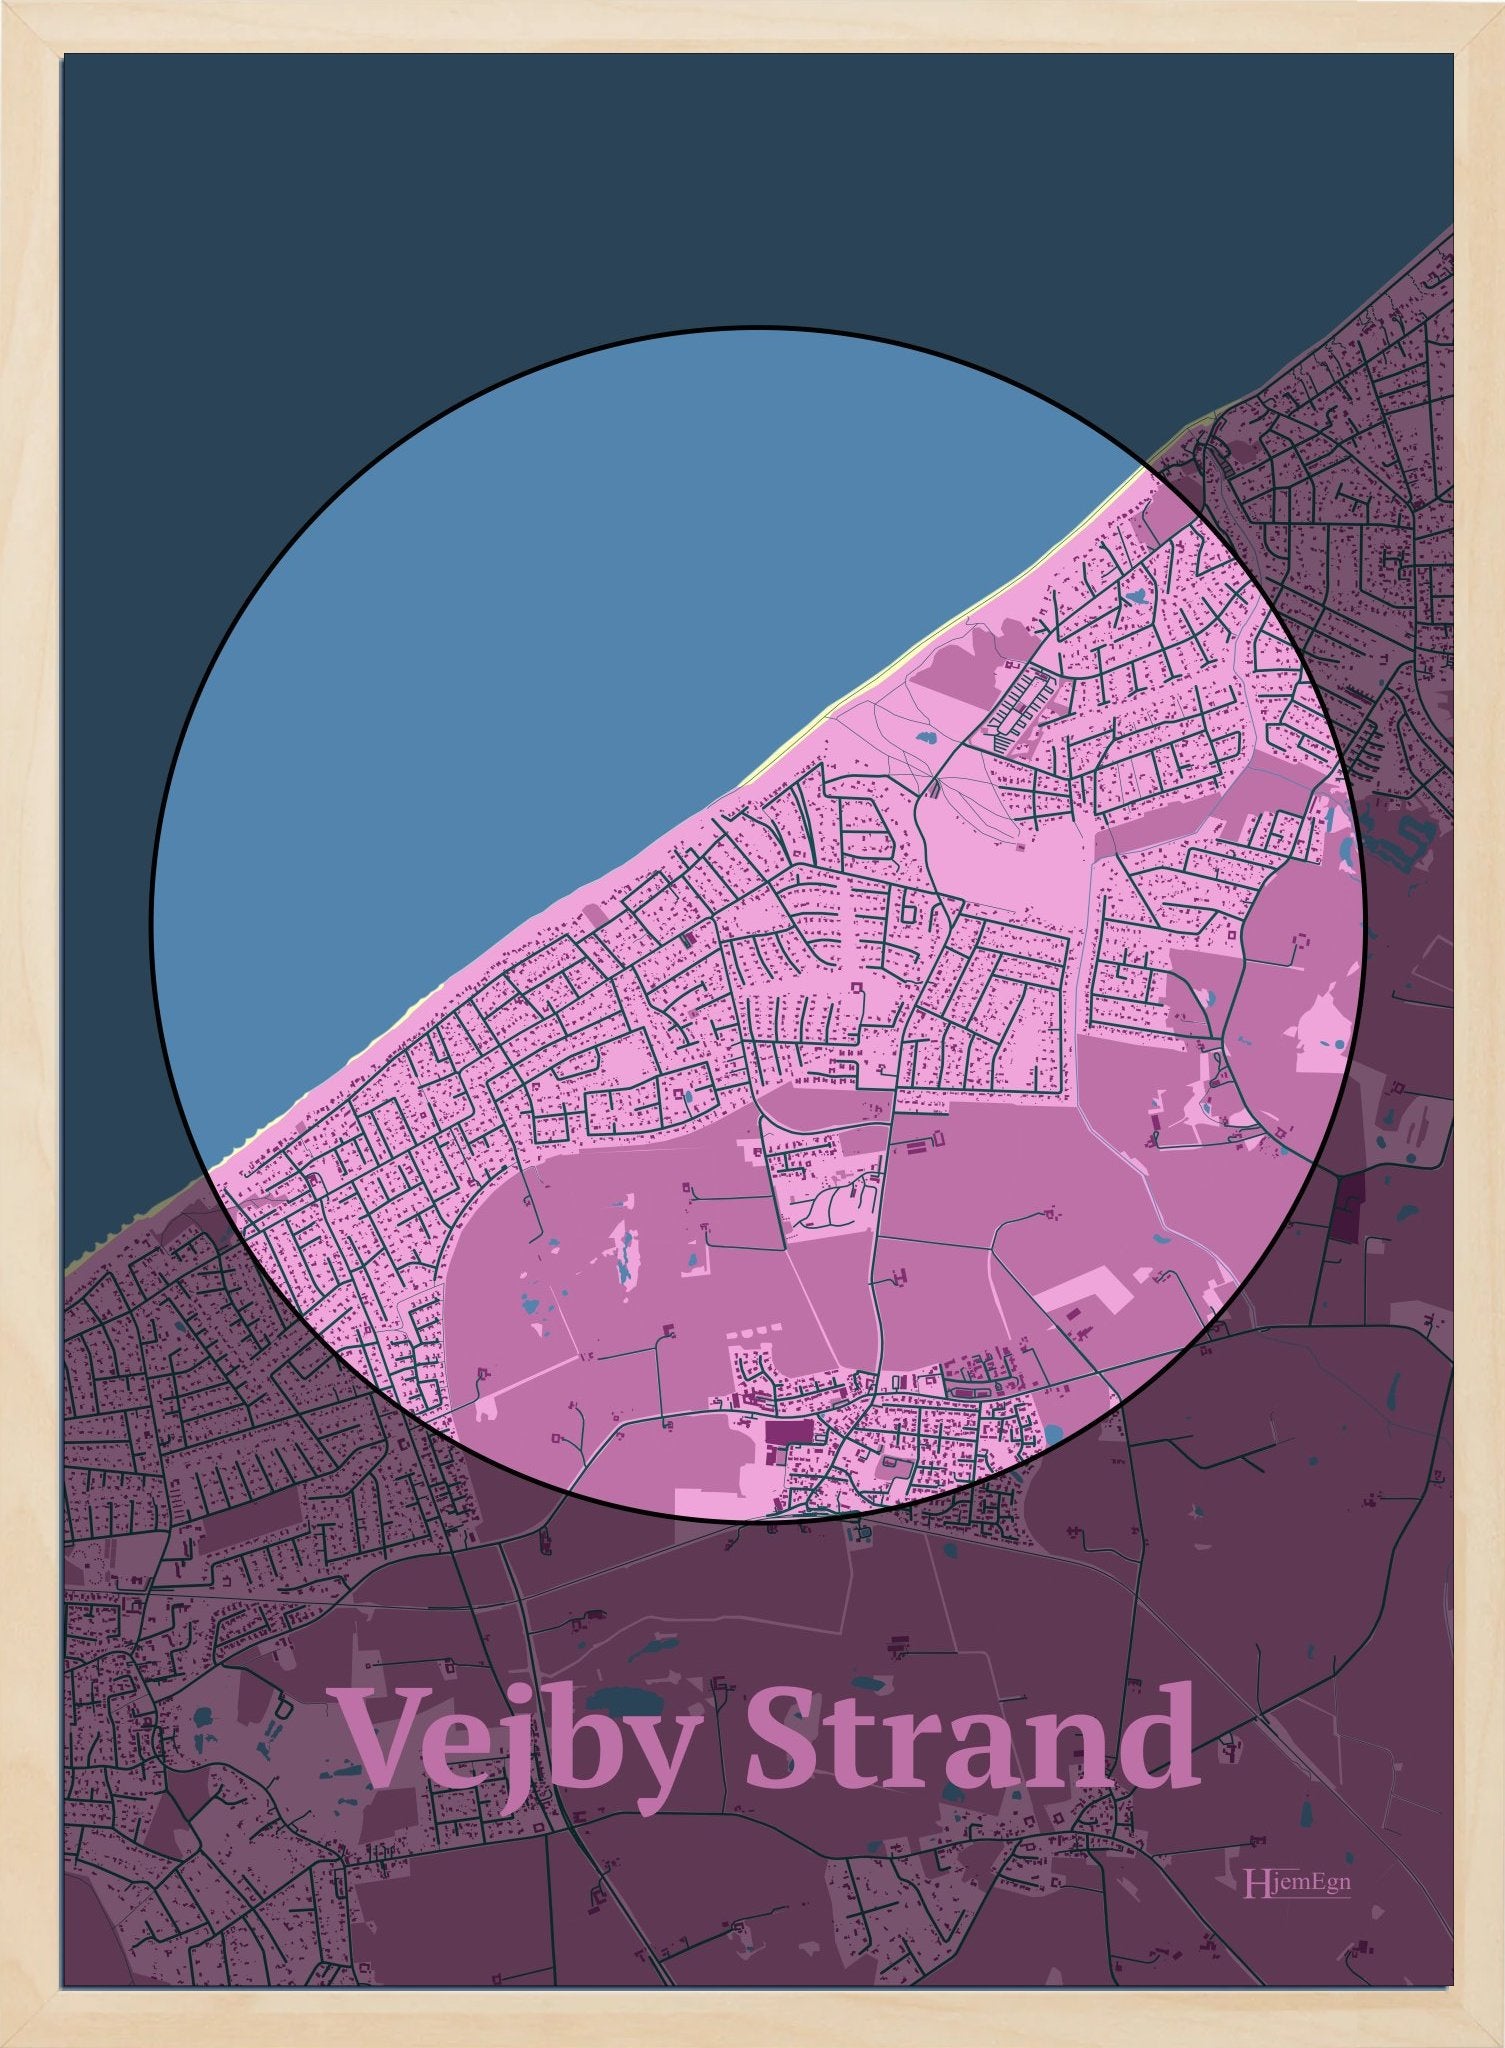 Vejby Strand plakat i farve pastel rød og HjemEgn.dk design centrum. Design bykort for Vejby Strand